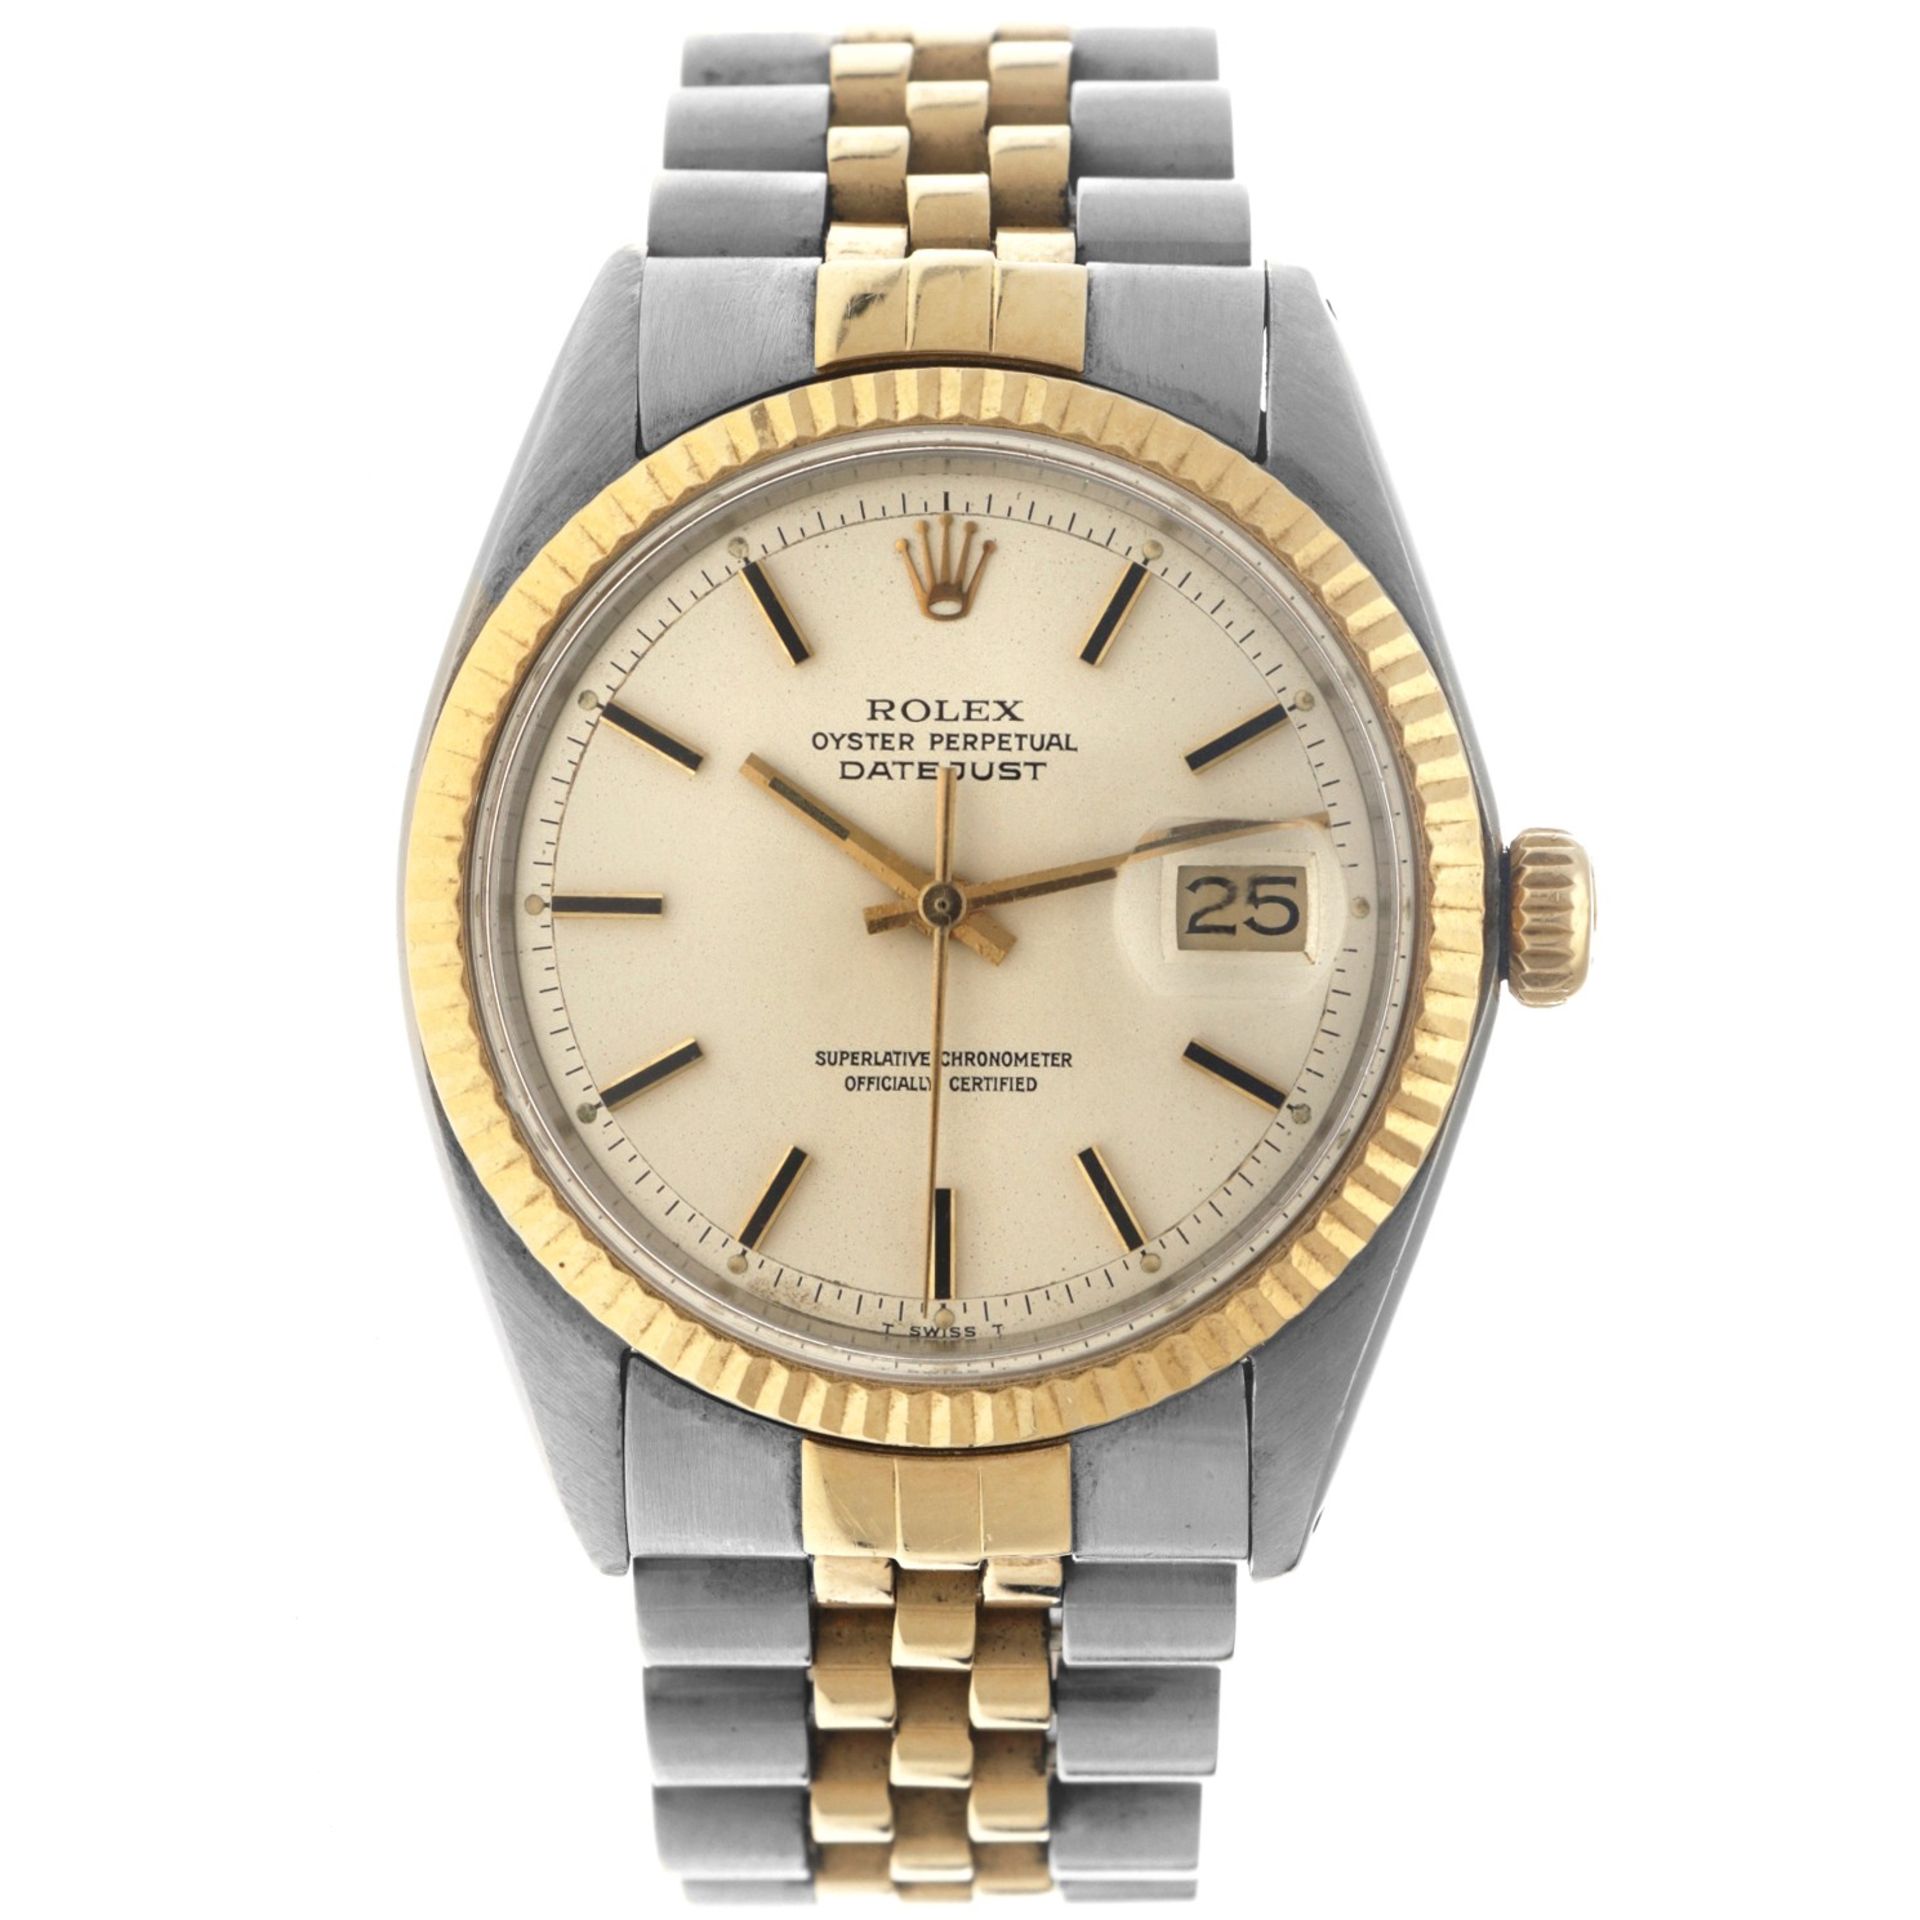 No Reserve - Rolex Datejust 36 1601 - Men's watch - approx. 1980.